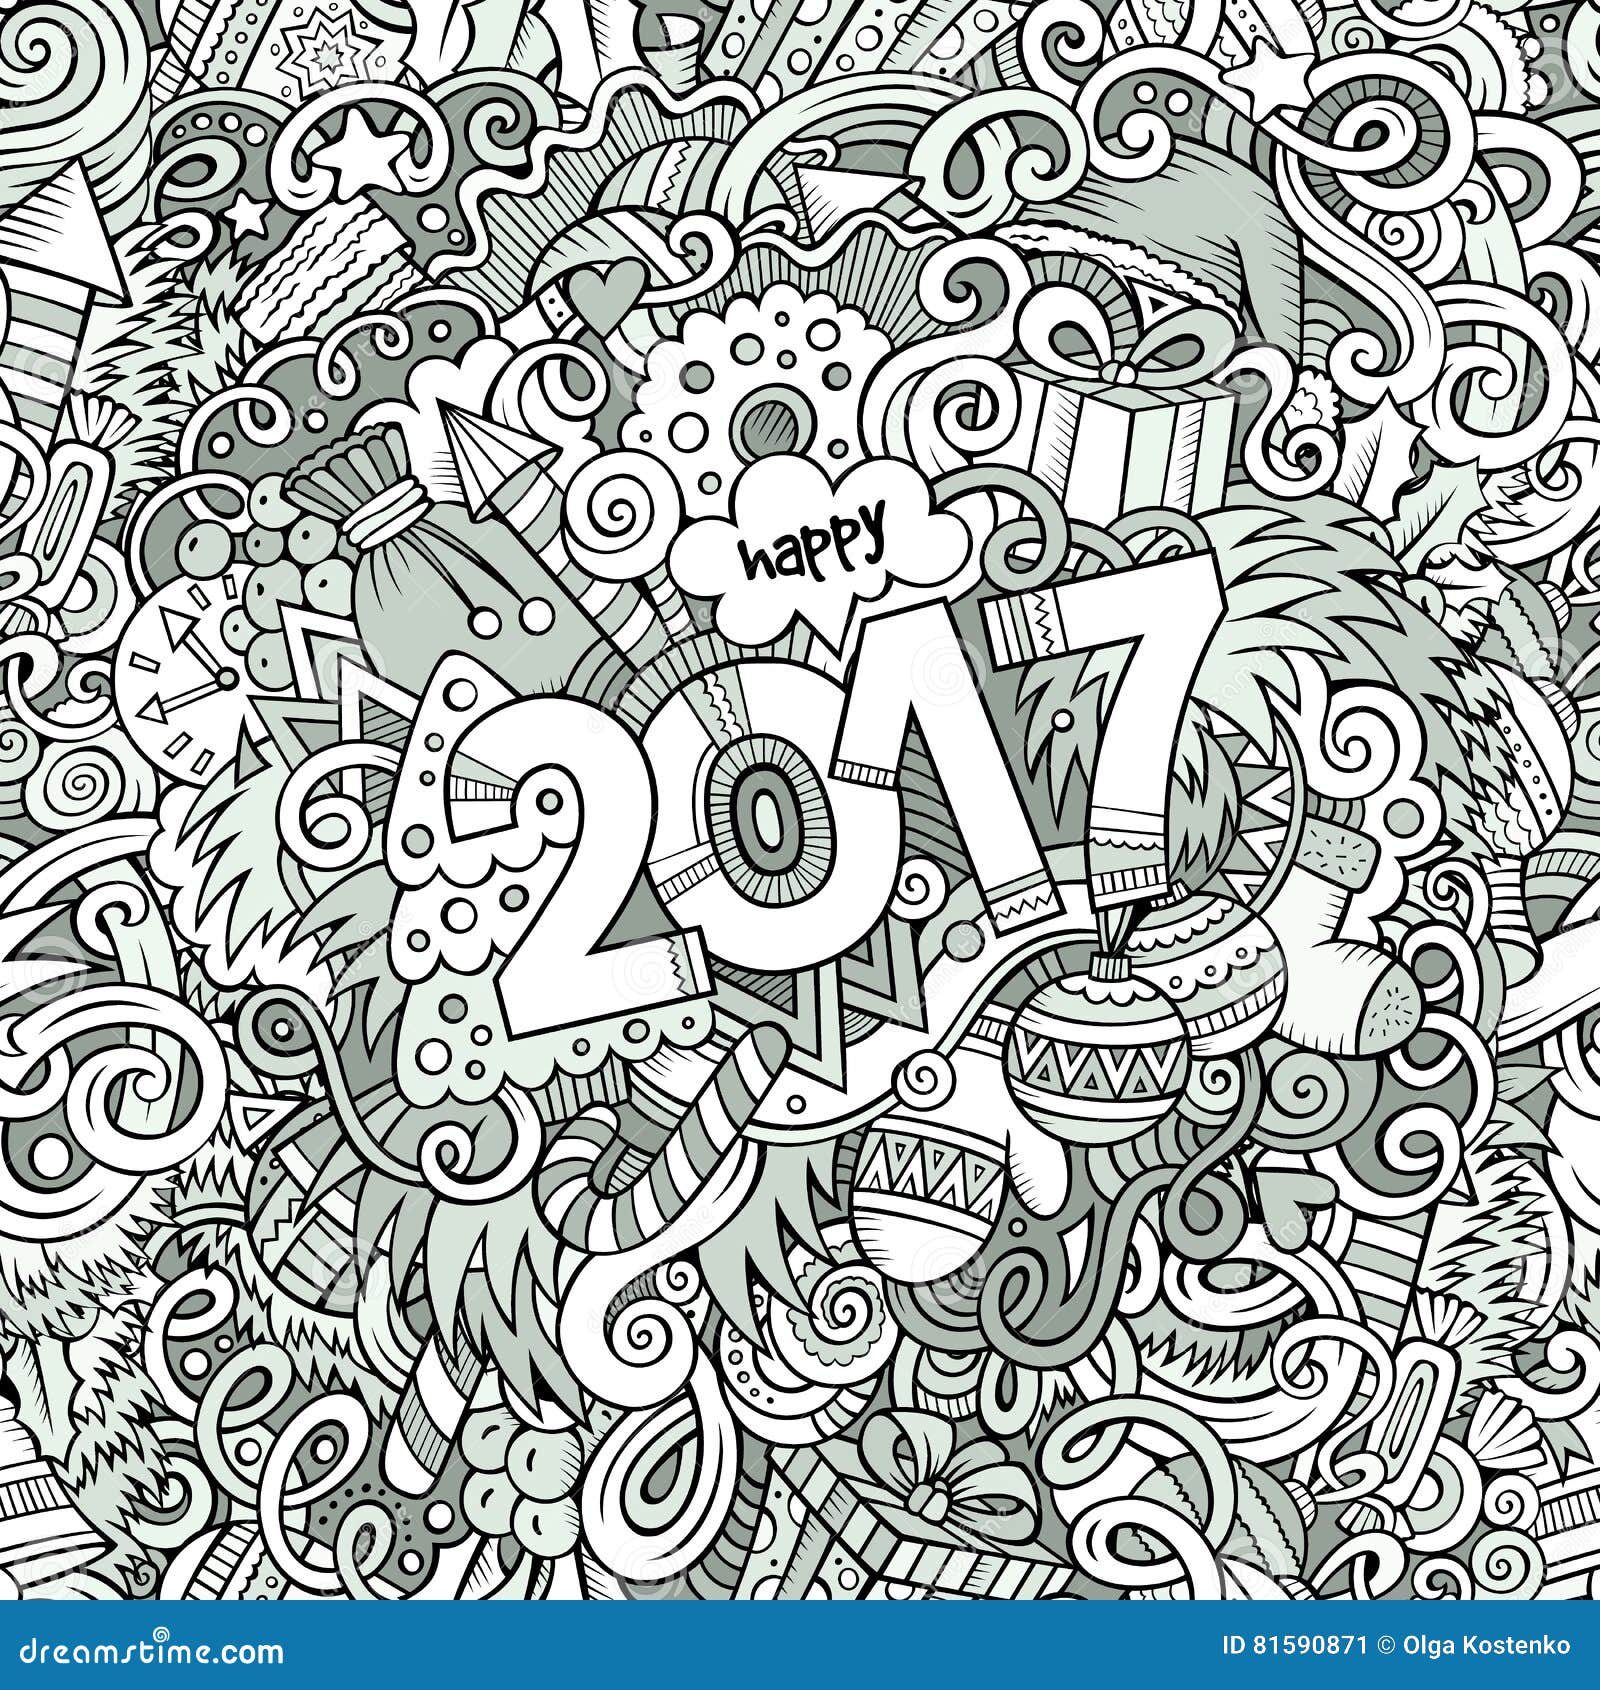 Cartoon Cute Doodles Hand Drawn New Year Illustration Stock Vector ...